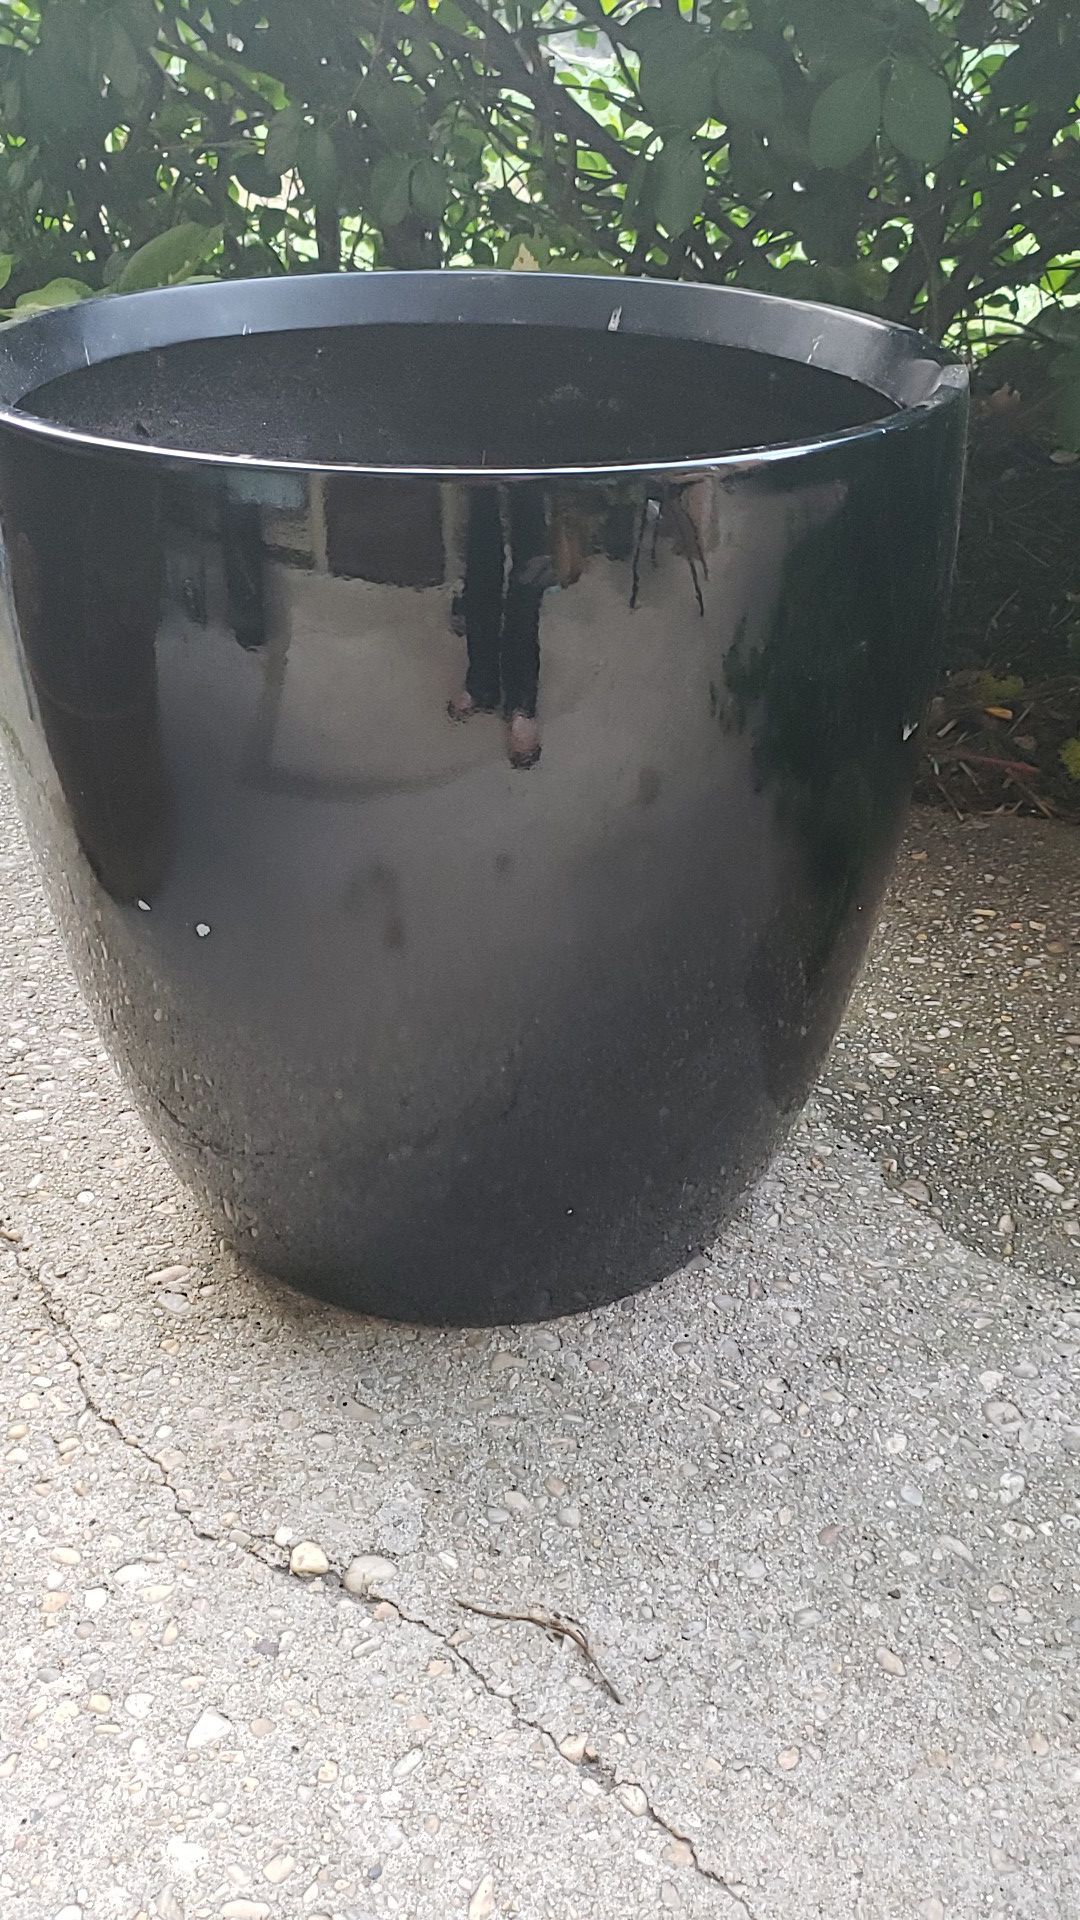 Fiberglass container for a 14" plant pot